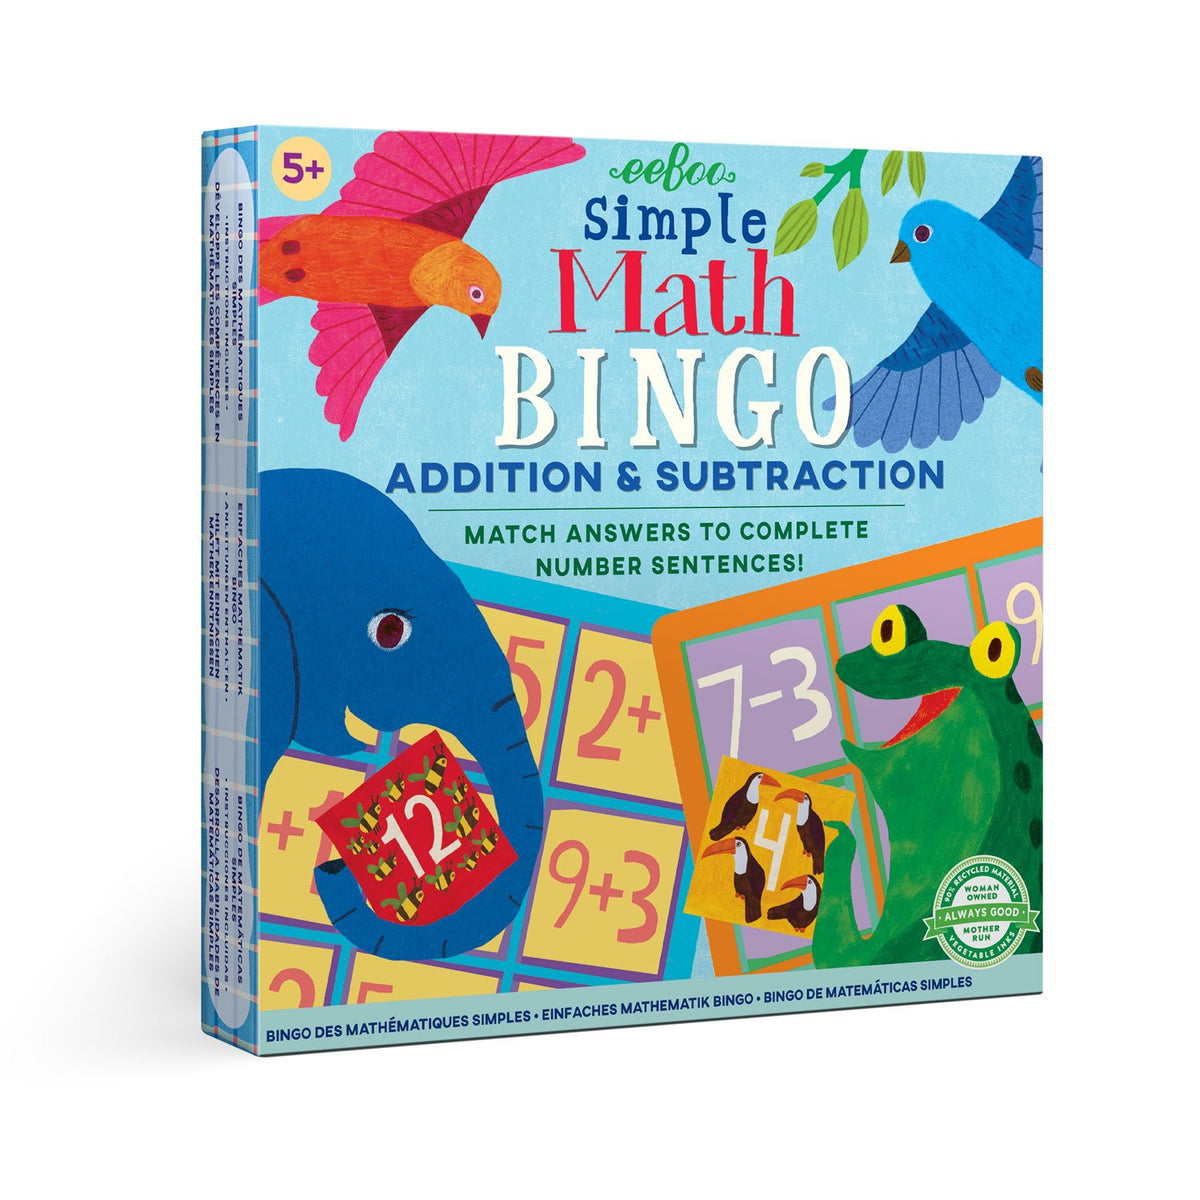 Simple Math Bingo | Addition + Subtraction